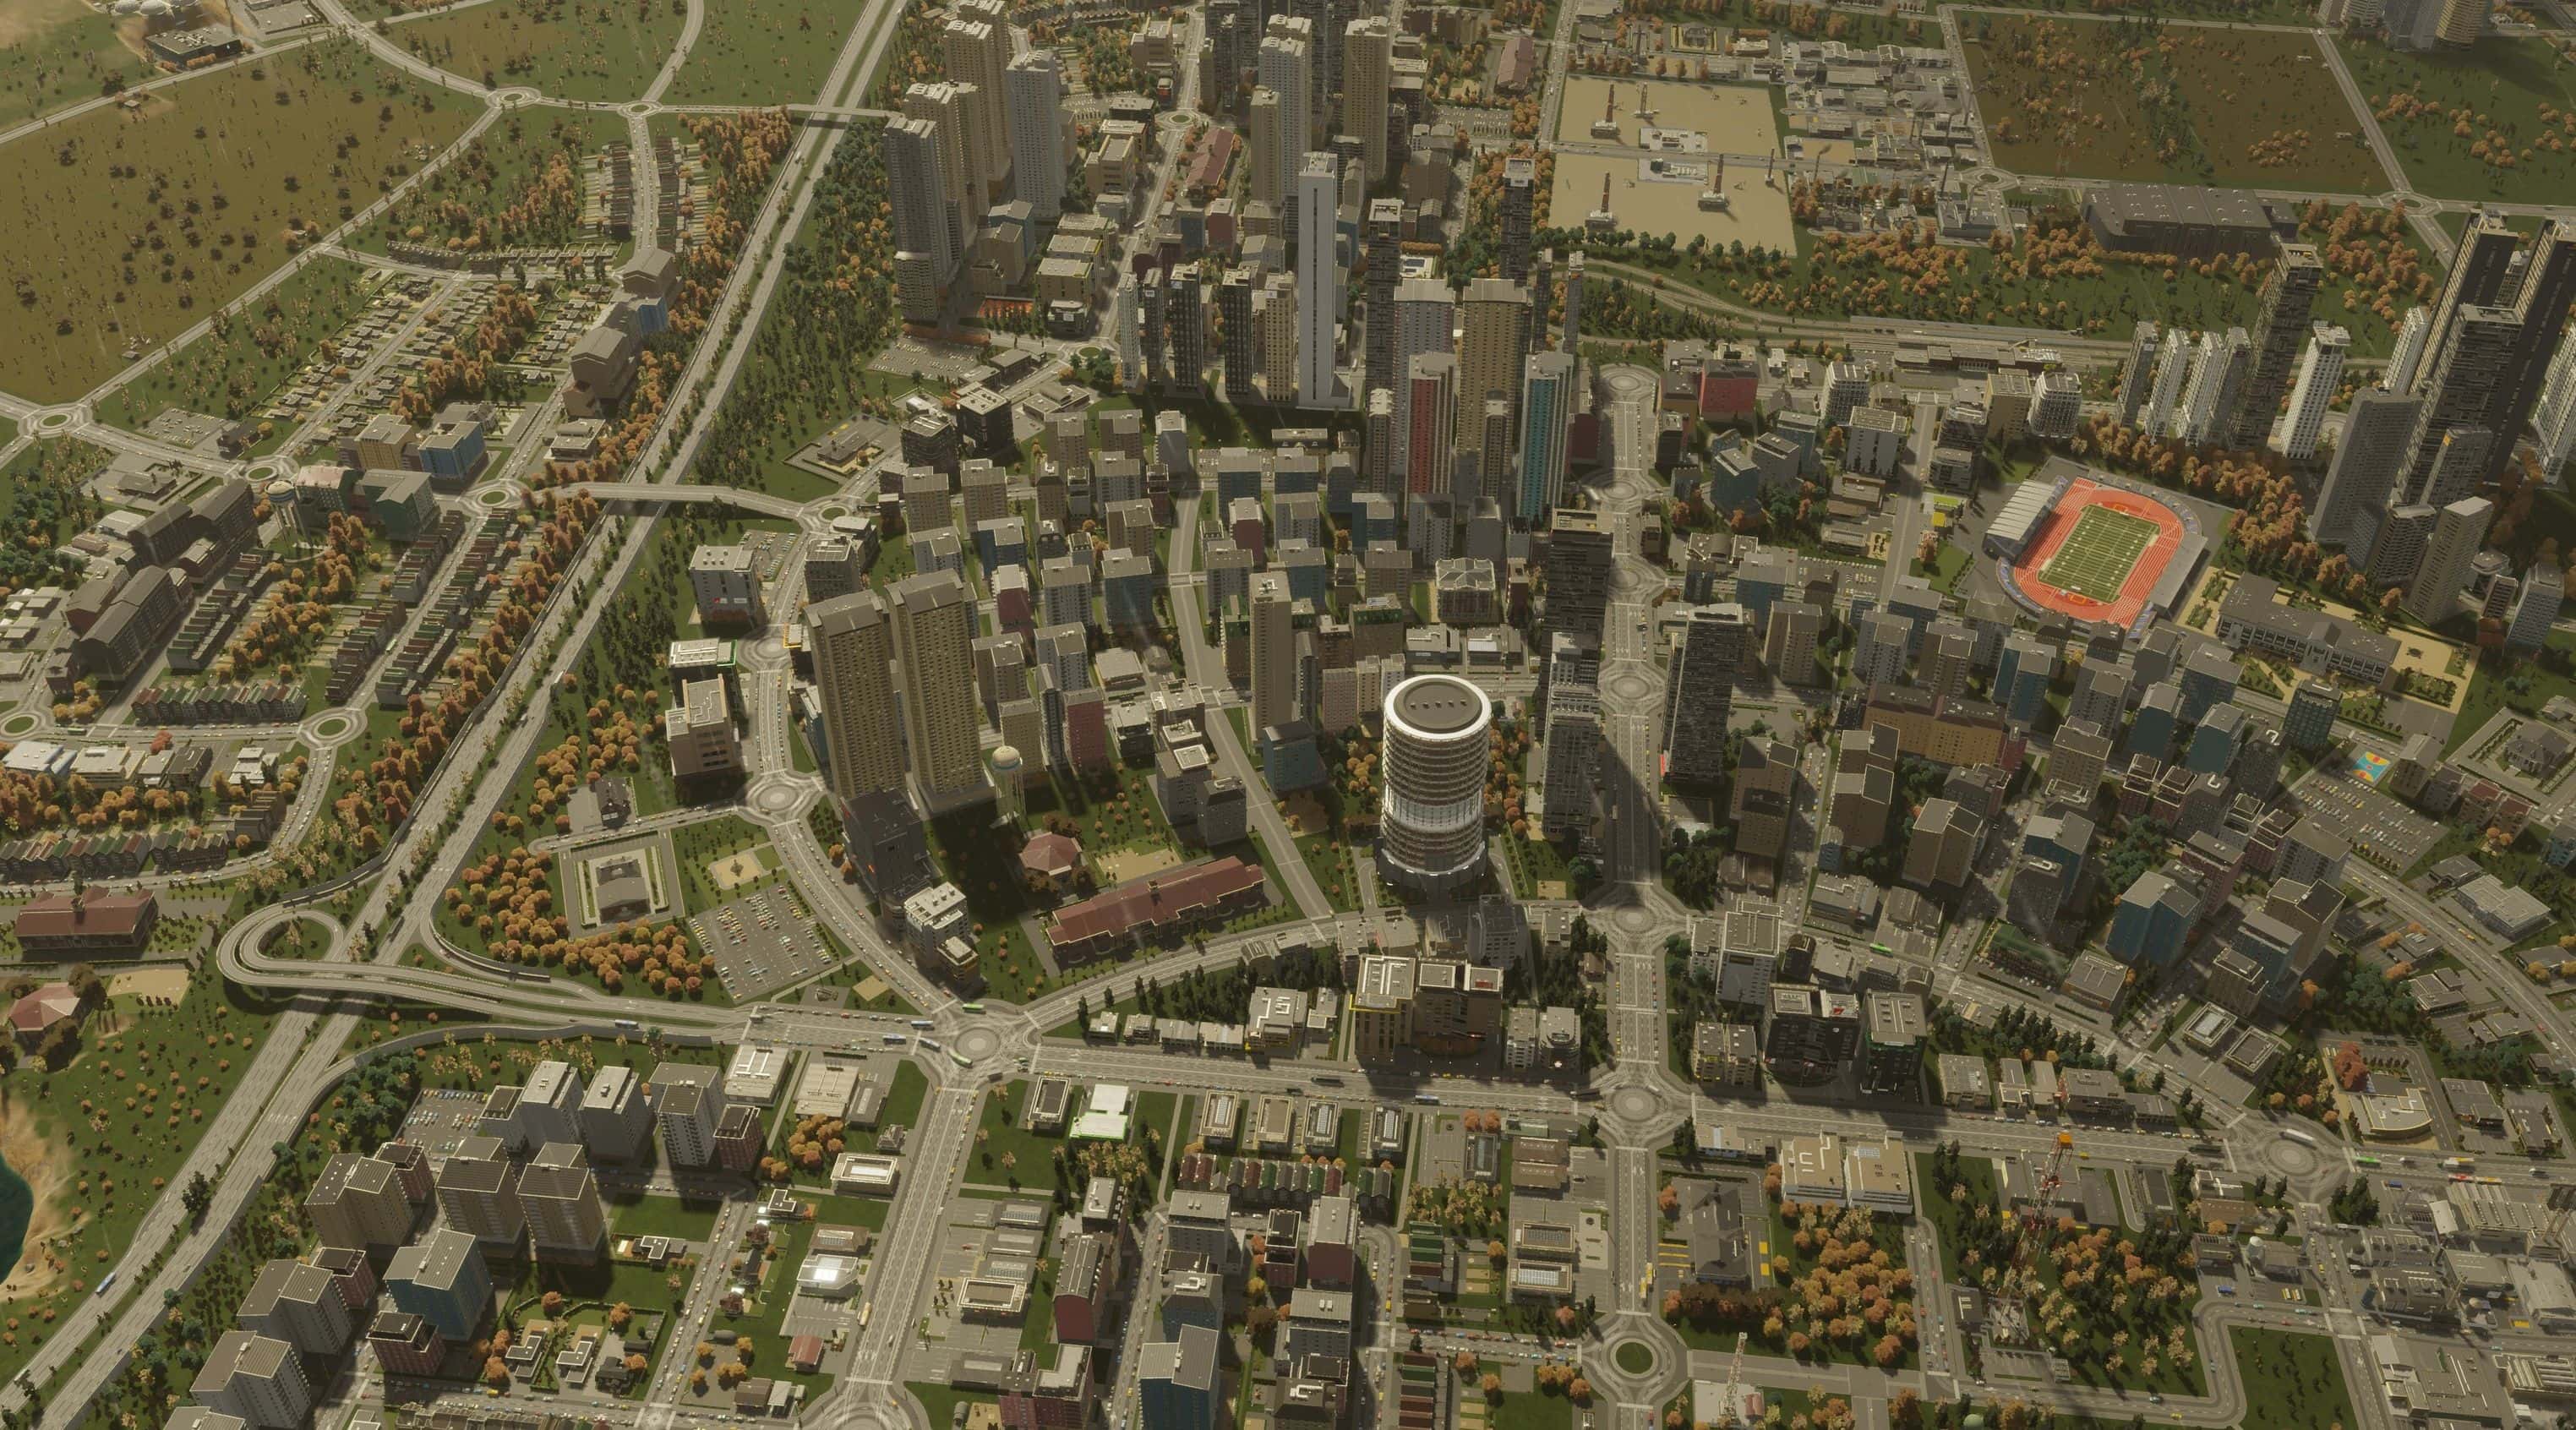 Cities skylines 2, 100k population test at 1440p medium settings :  r/IntelArc